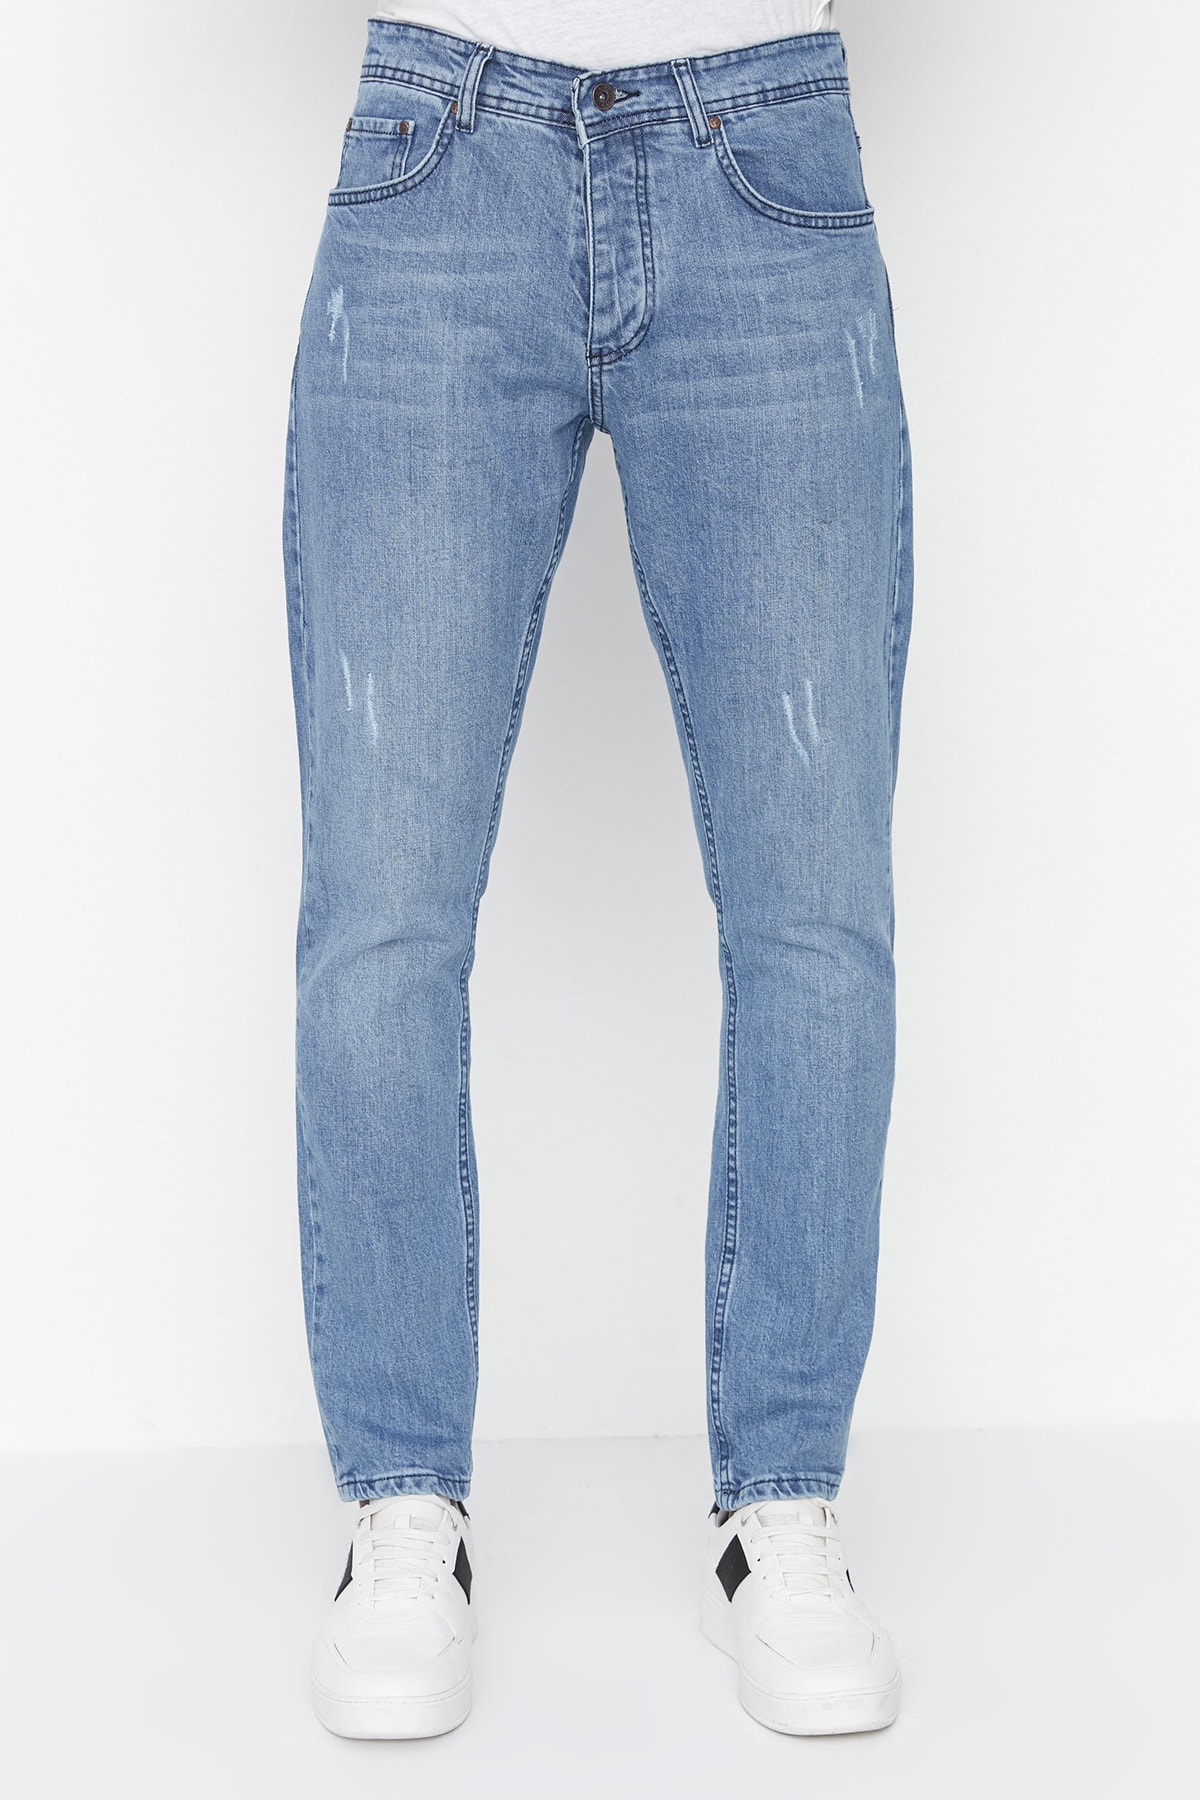 Trendyol Light Blue Men's Flexible Fabric Scratched Destroyed Slim Fit Jeans Denim Trousers